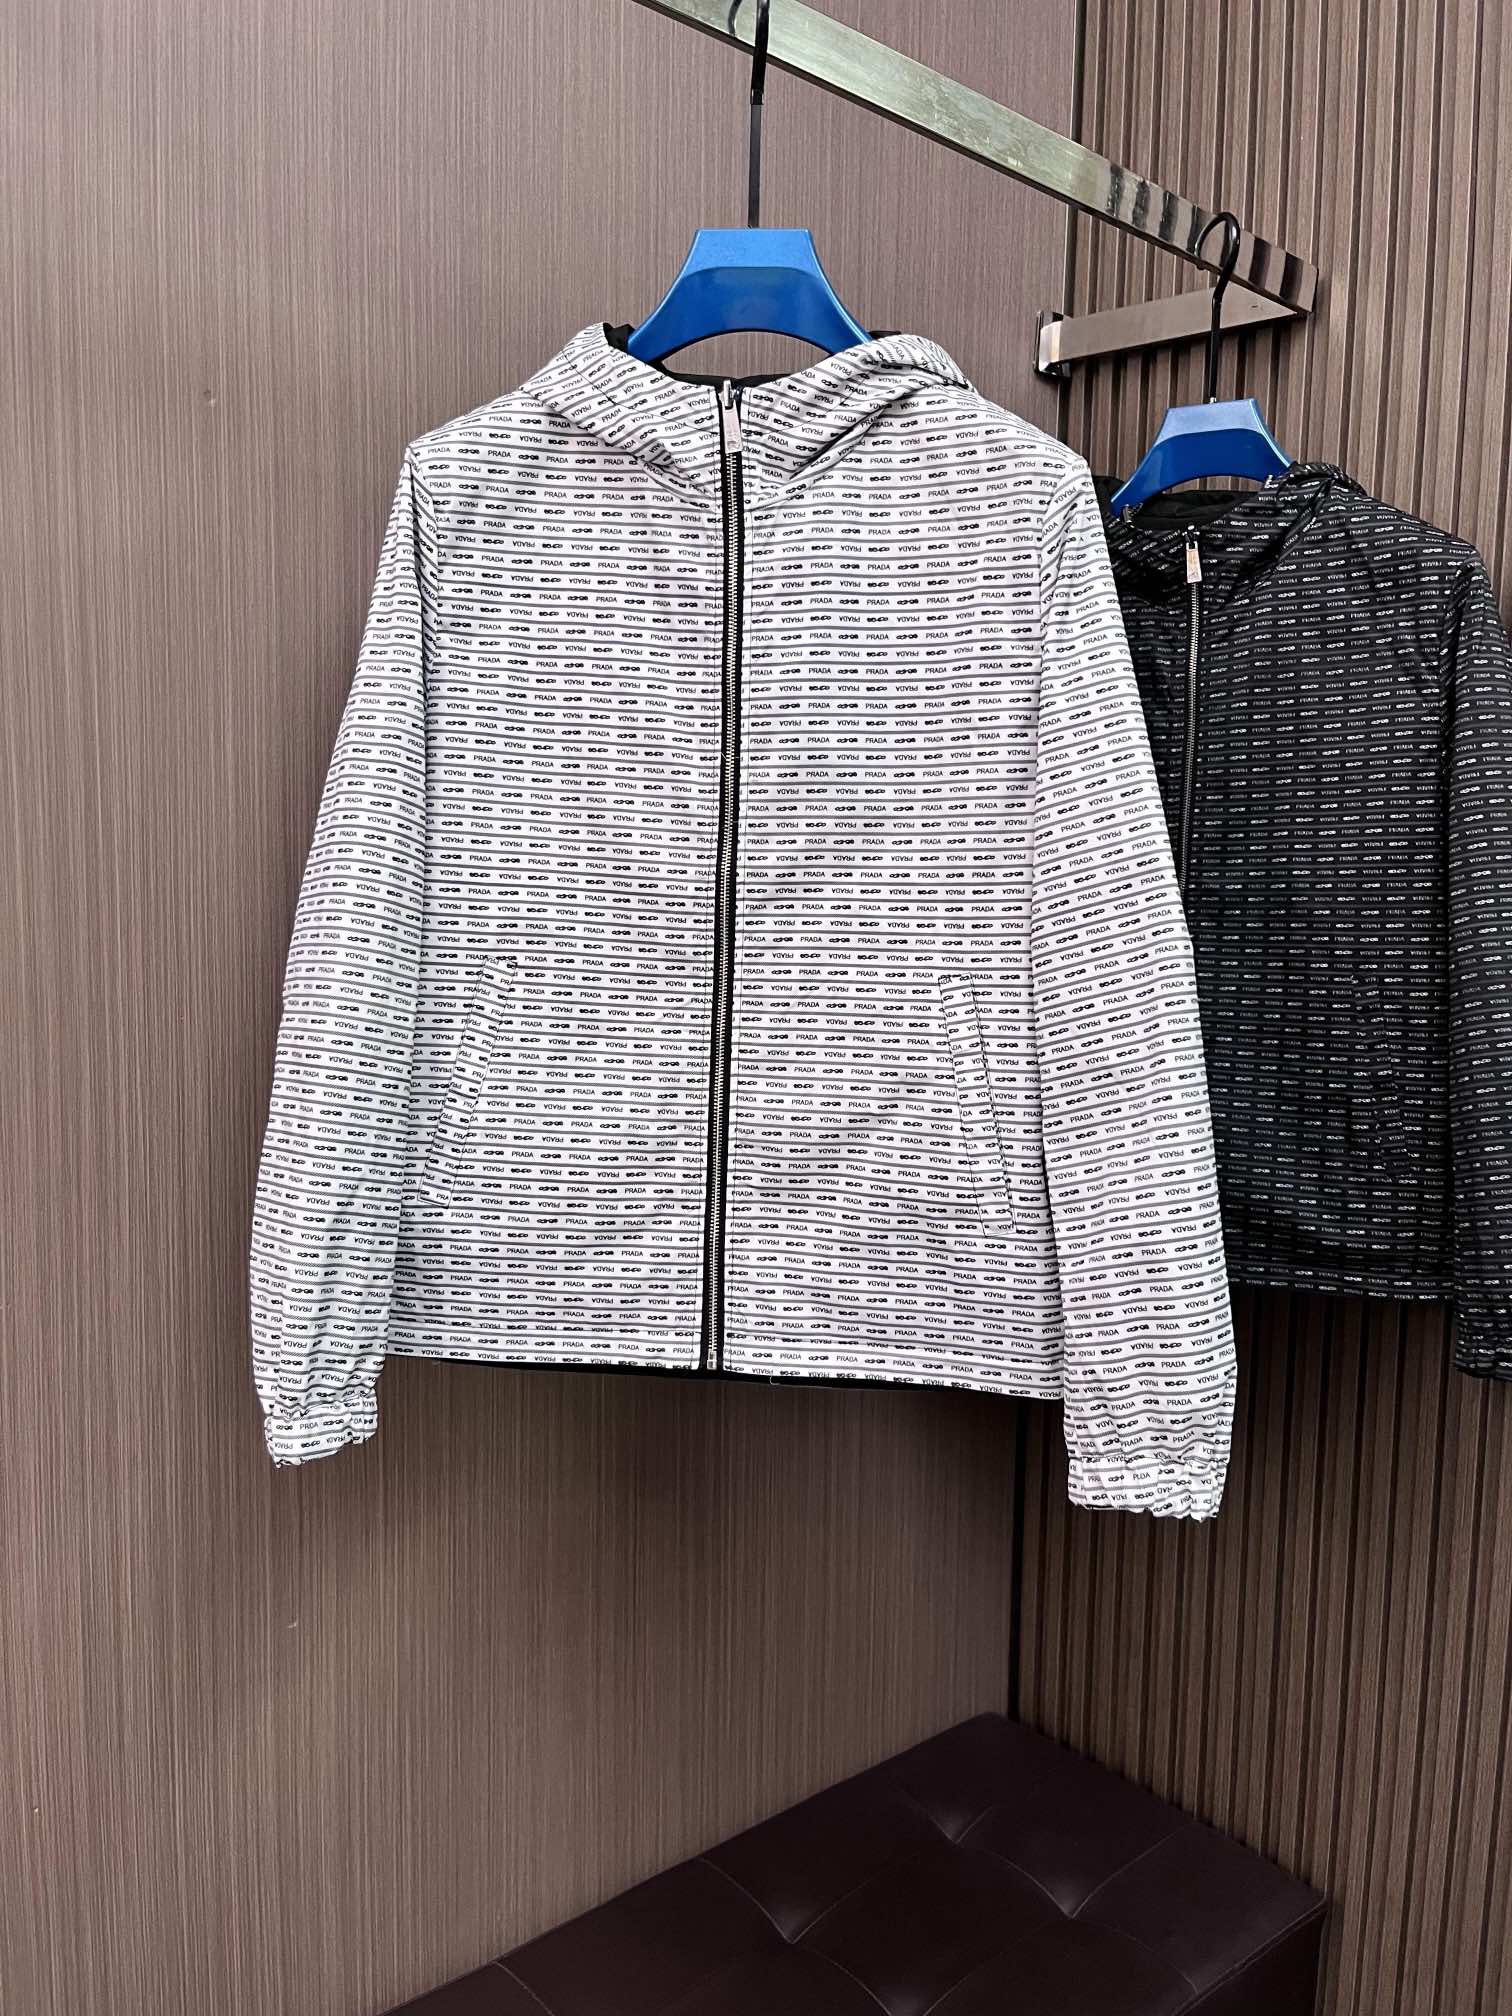 Prada Clothing Coats & Jackets Printing Fall/Winter Collection Fashion